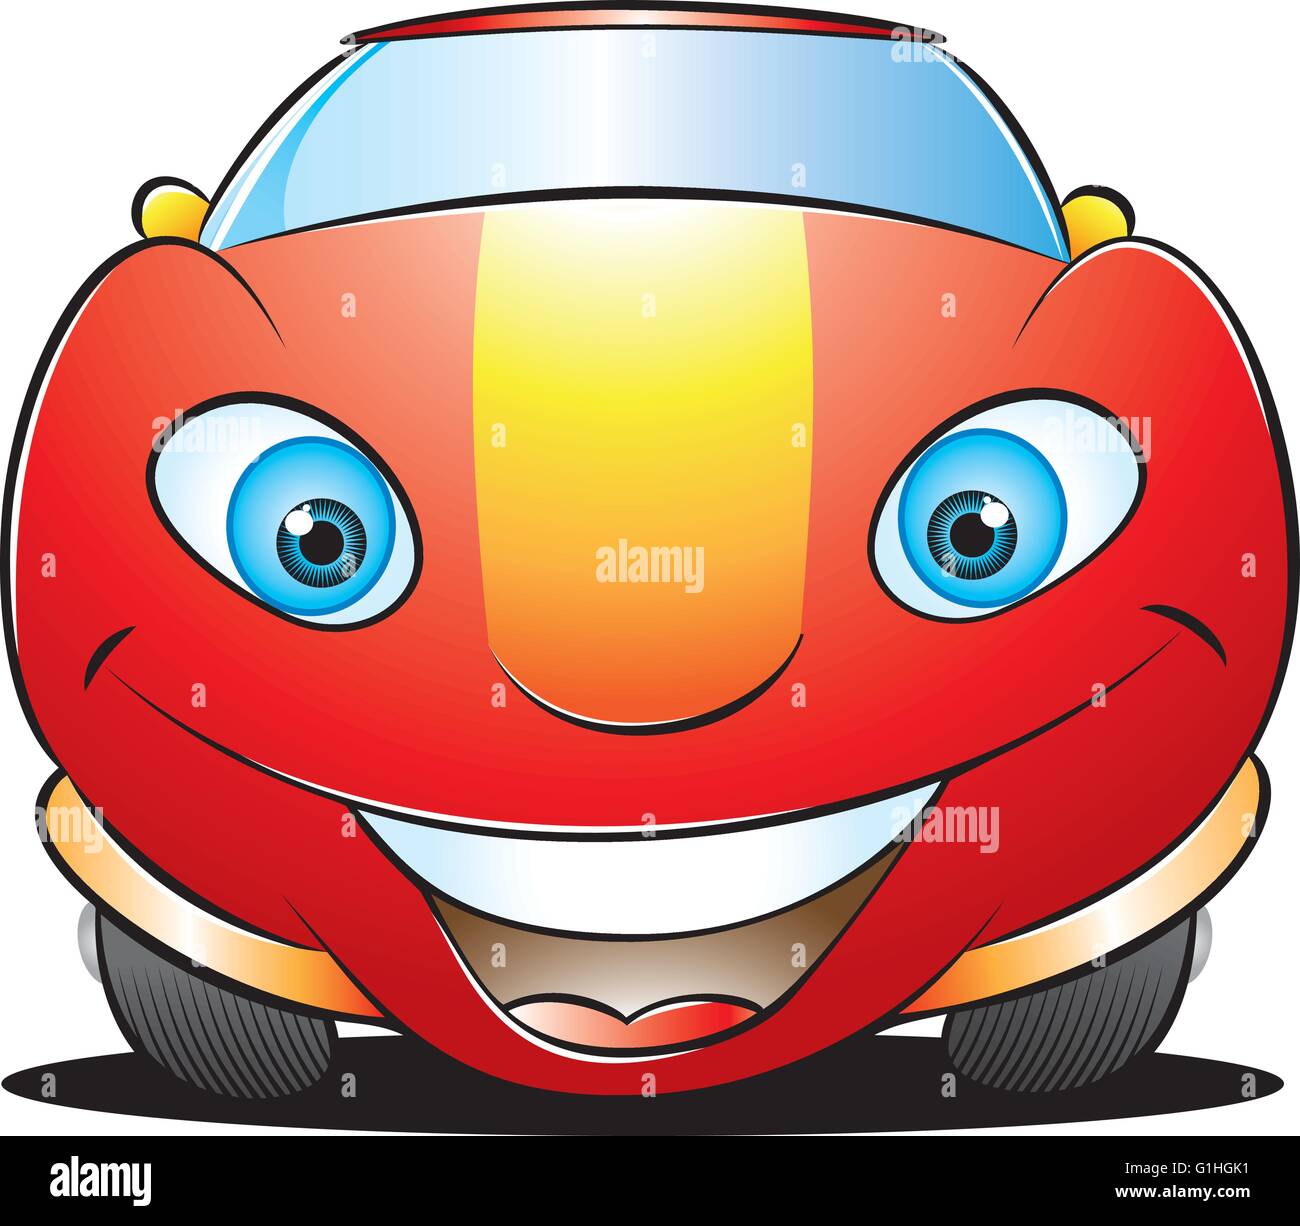 Vector illustration of a smiling red car mascot Illustration de Vecteur